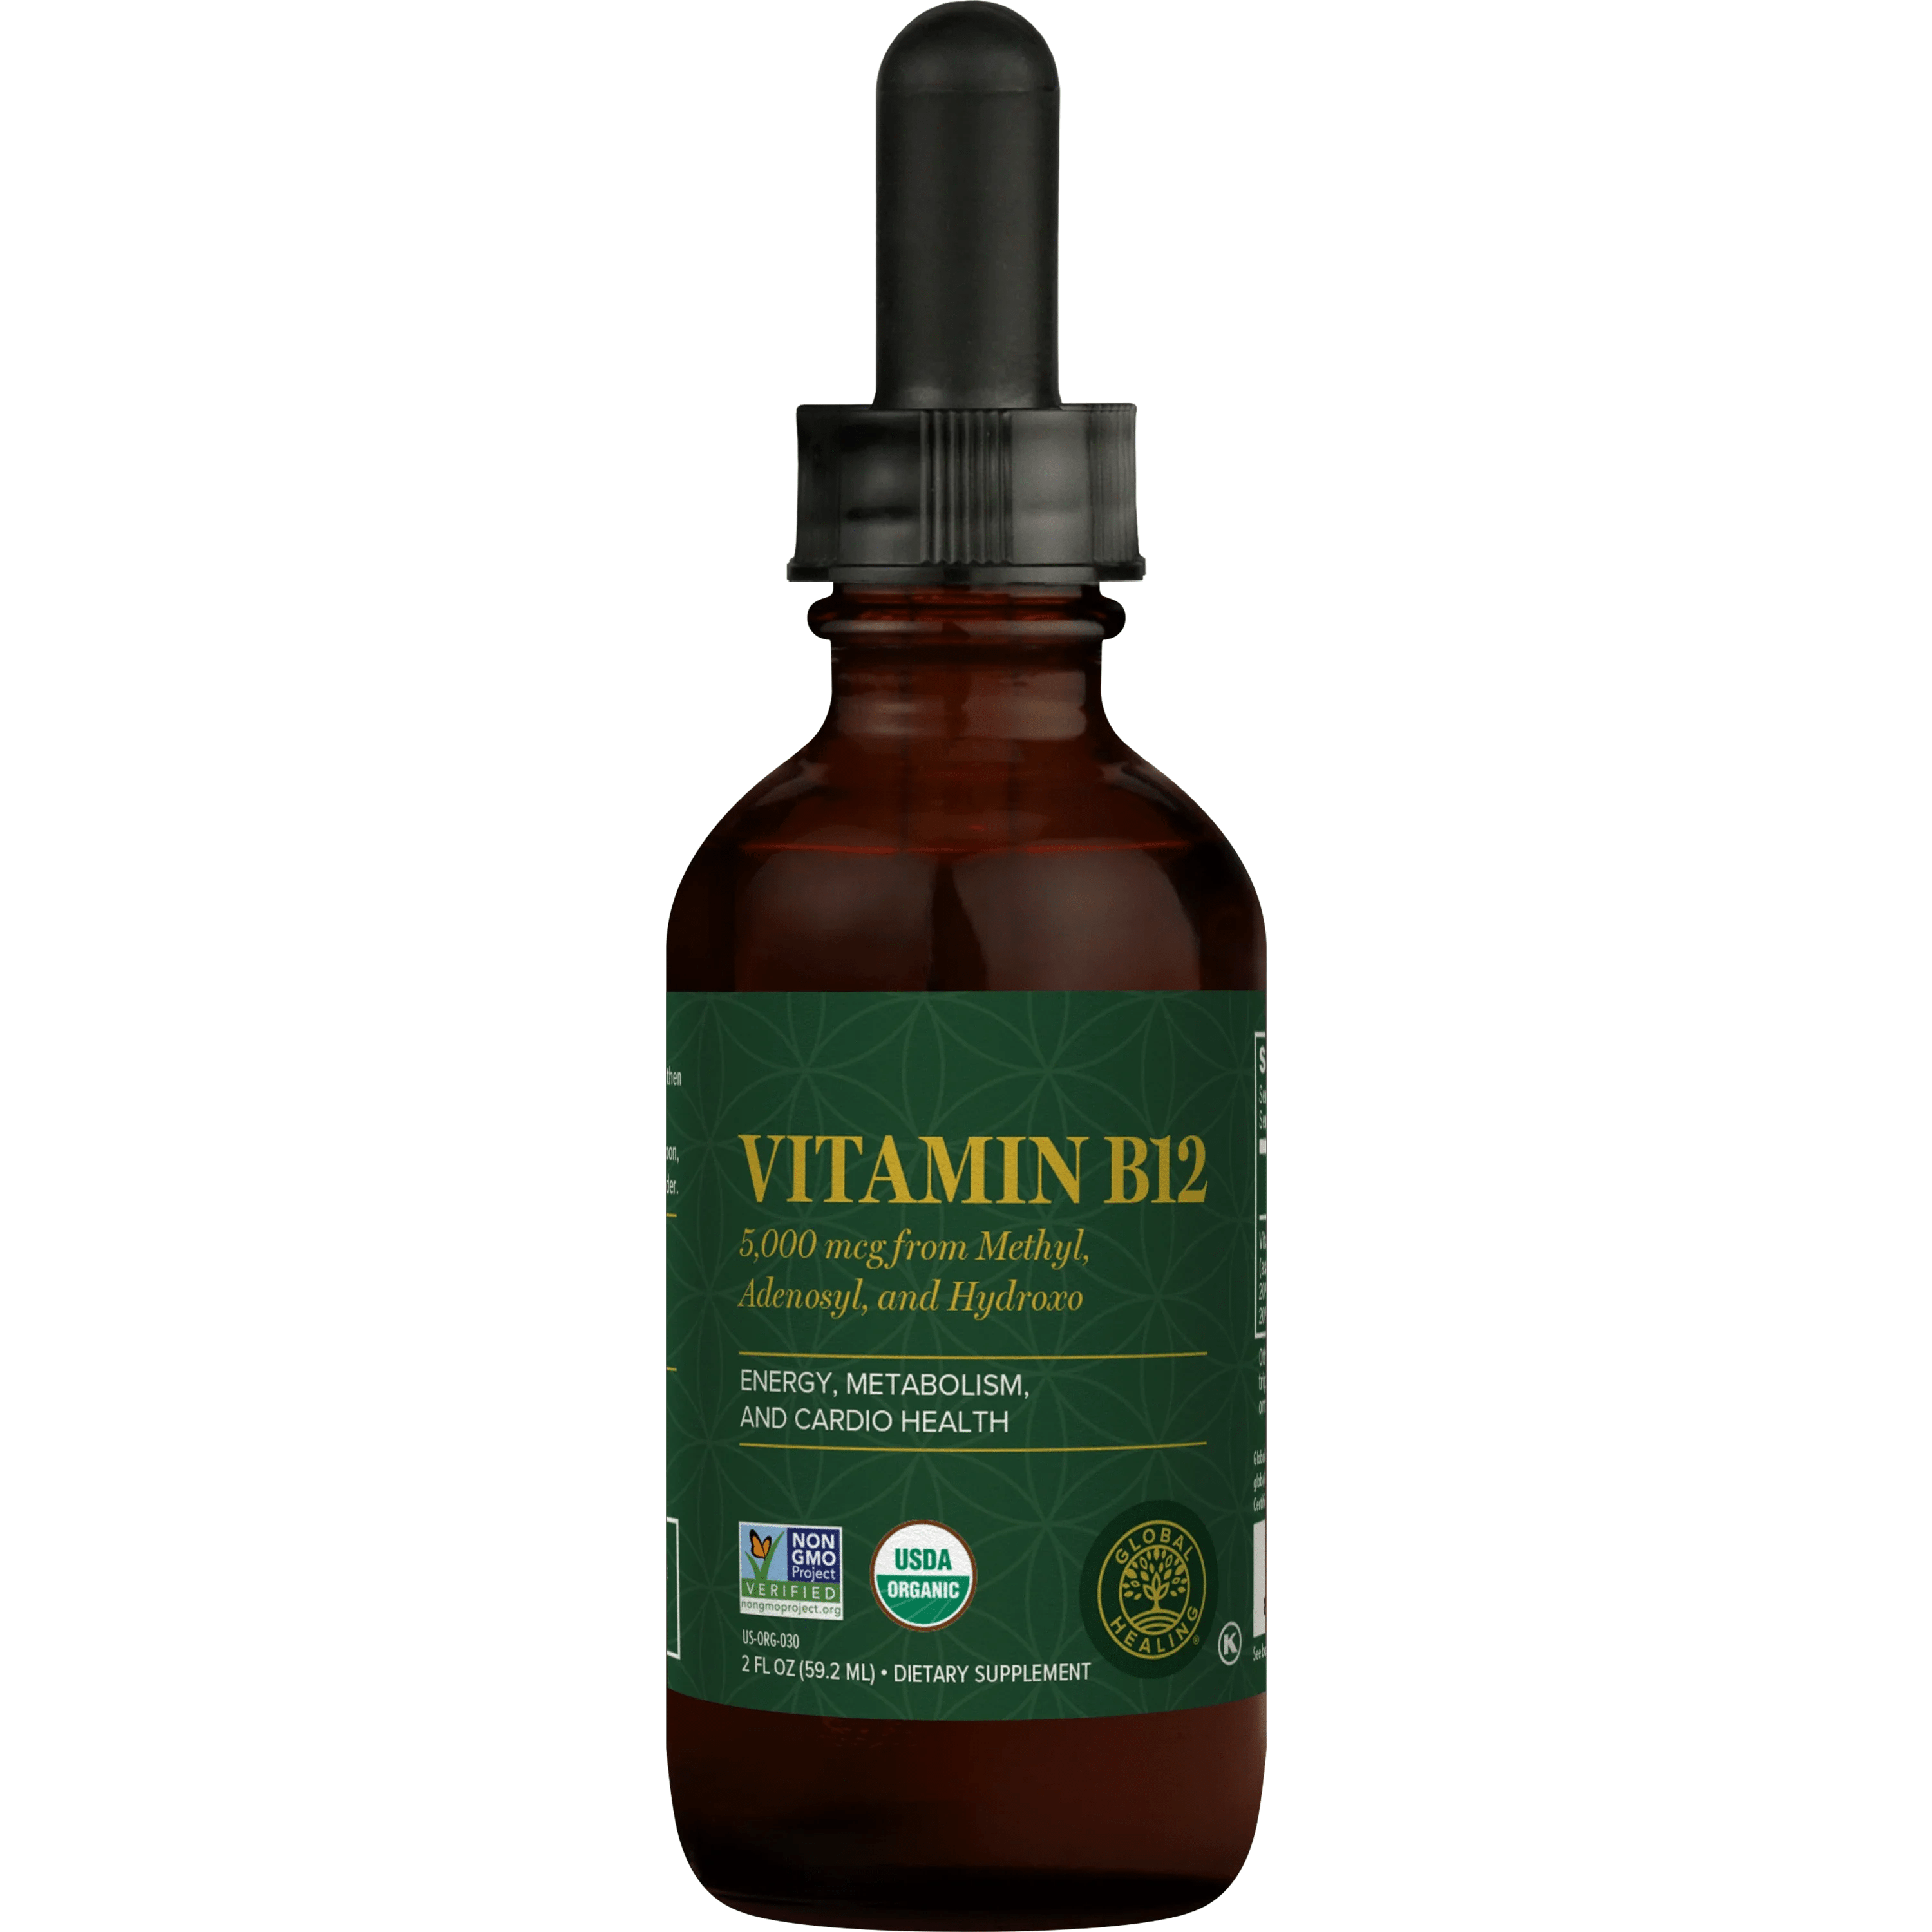 Vitamin B12 bottle from Global Healing Thyroid Health Bundle